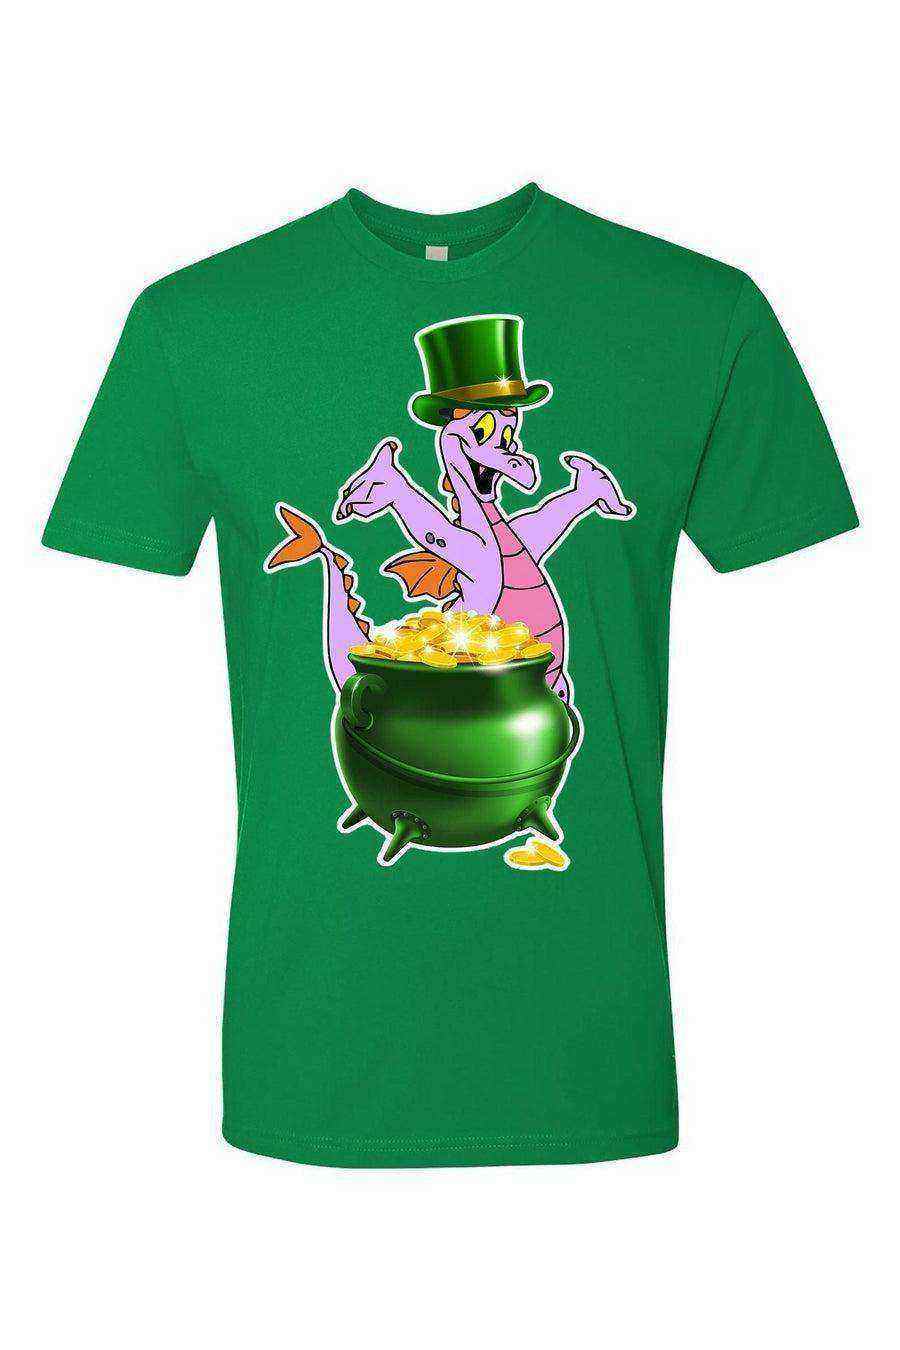 Figment St Patricks Day Shirt | Figment Shirt - Dylan's Tees